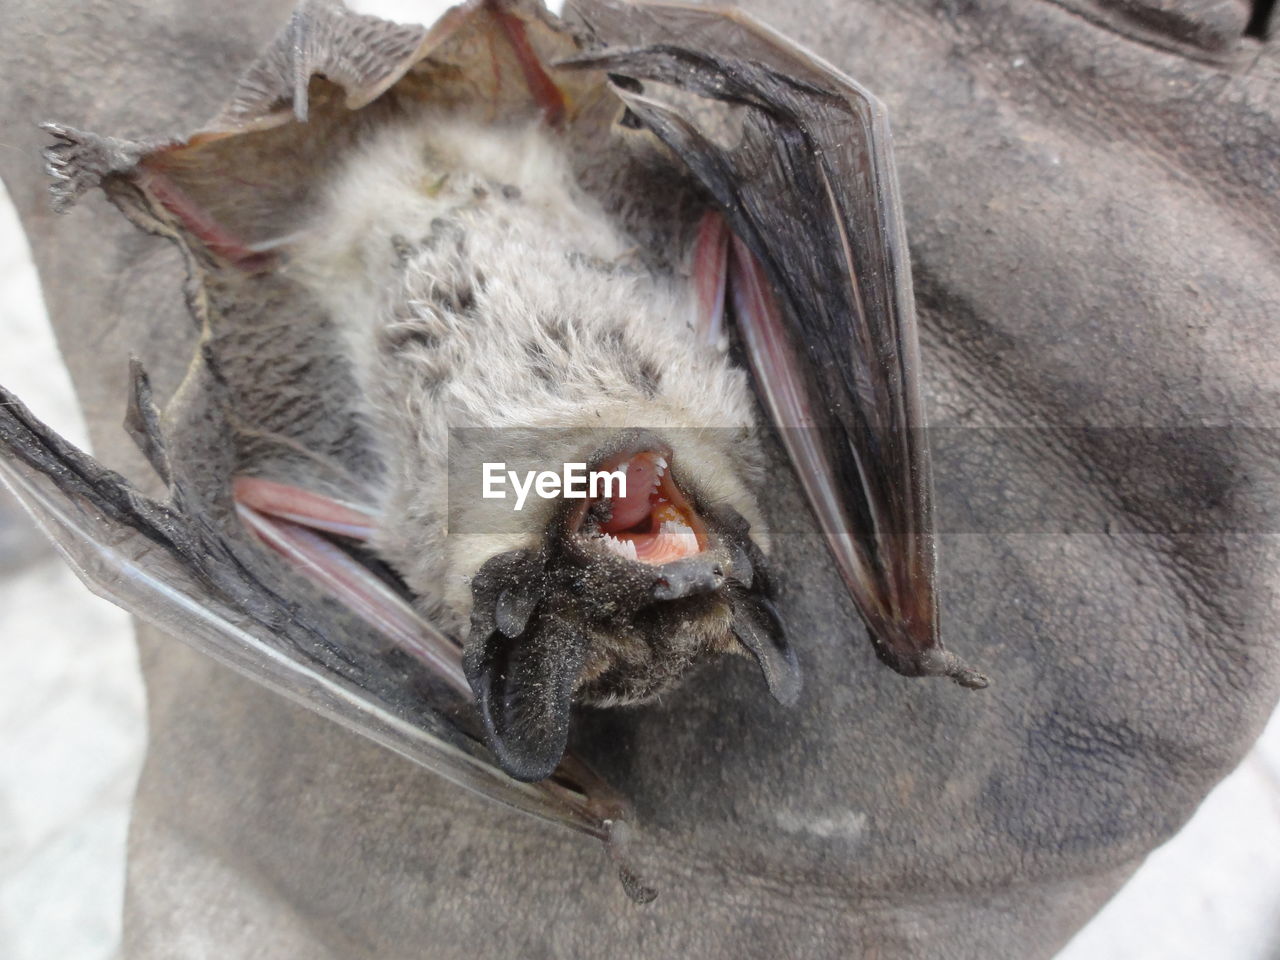 Extreme close up of a bat